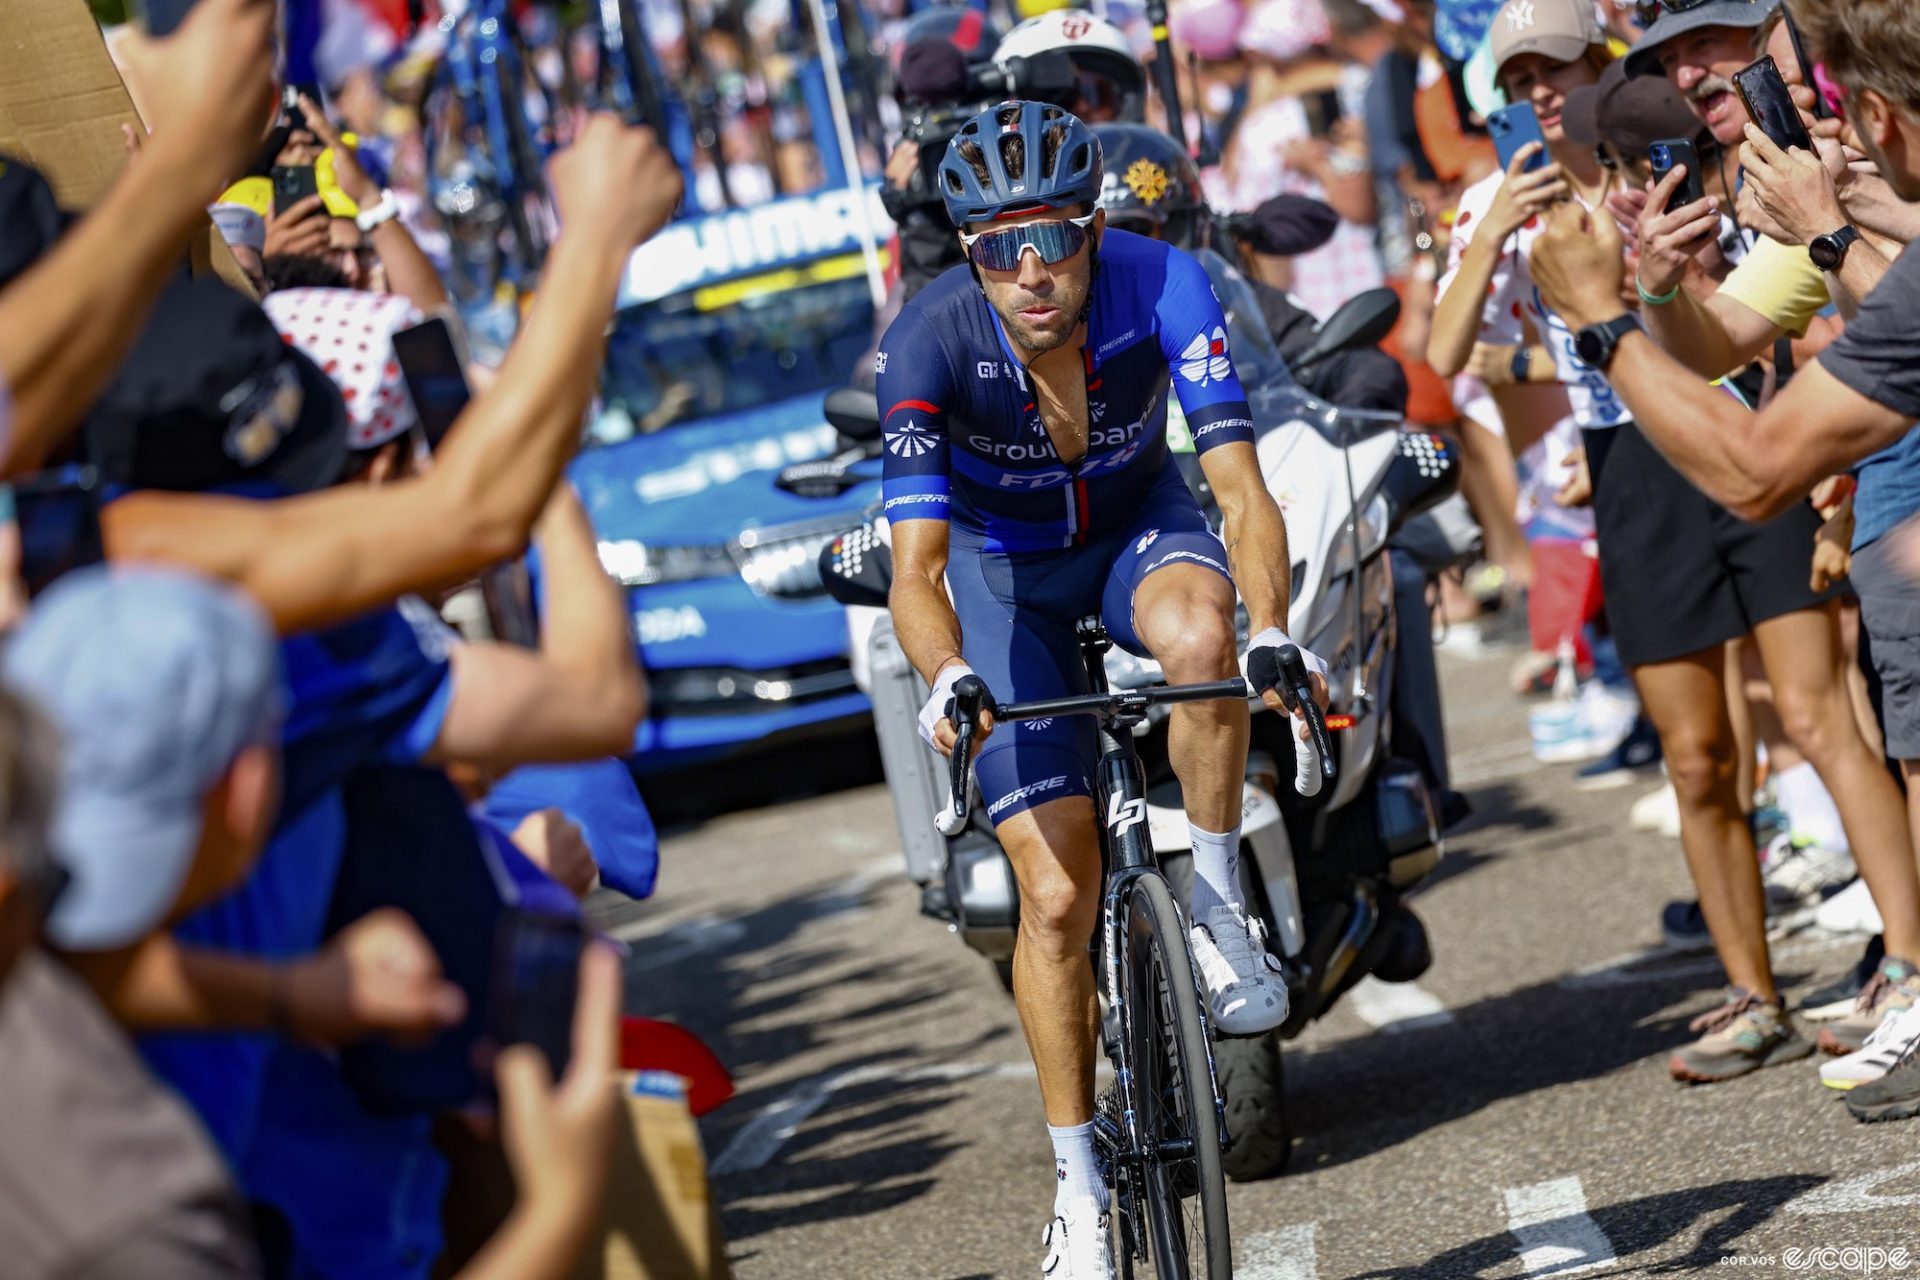 Thibaut Pinot rides through a crowd of fans at the Tour de France.